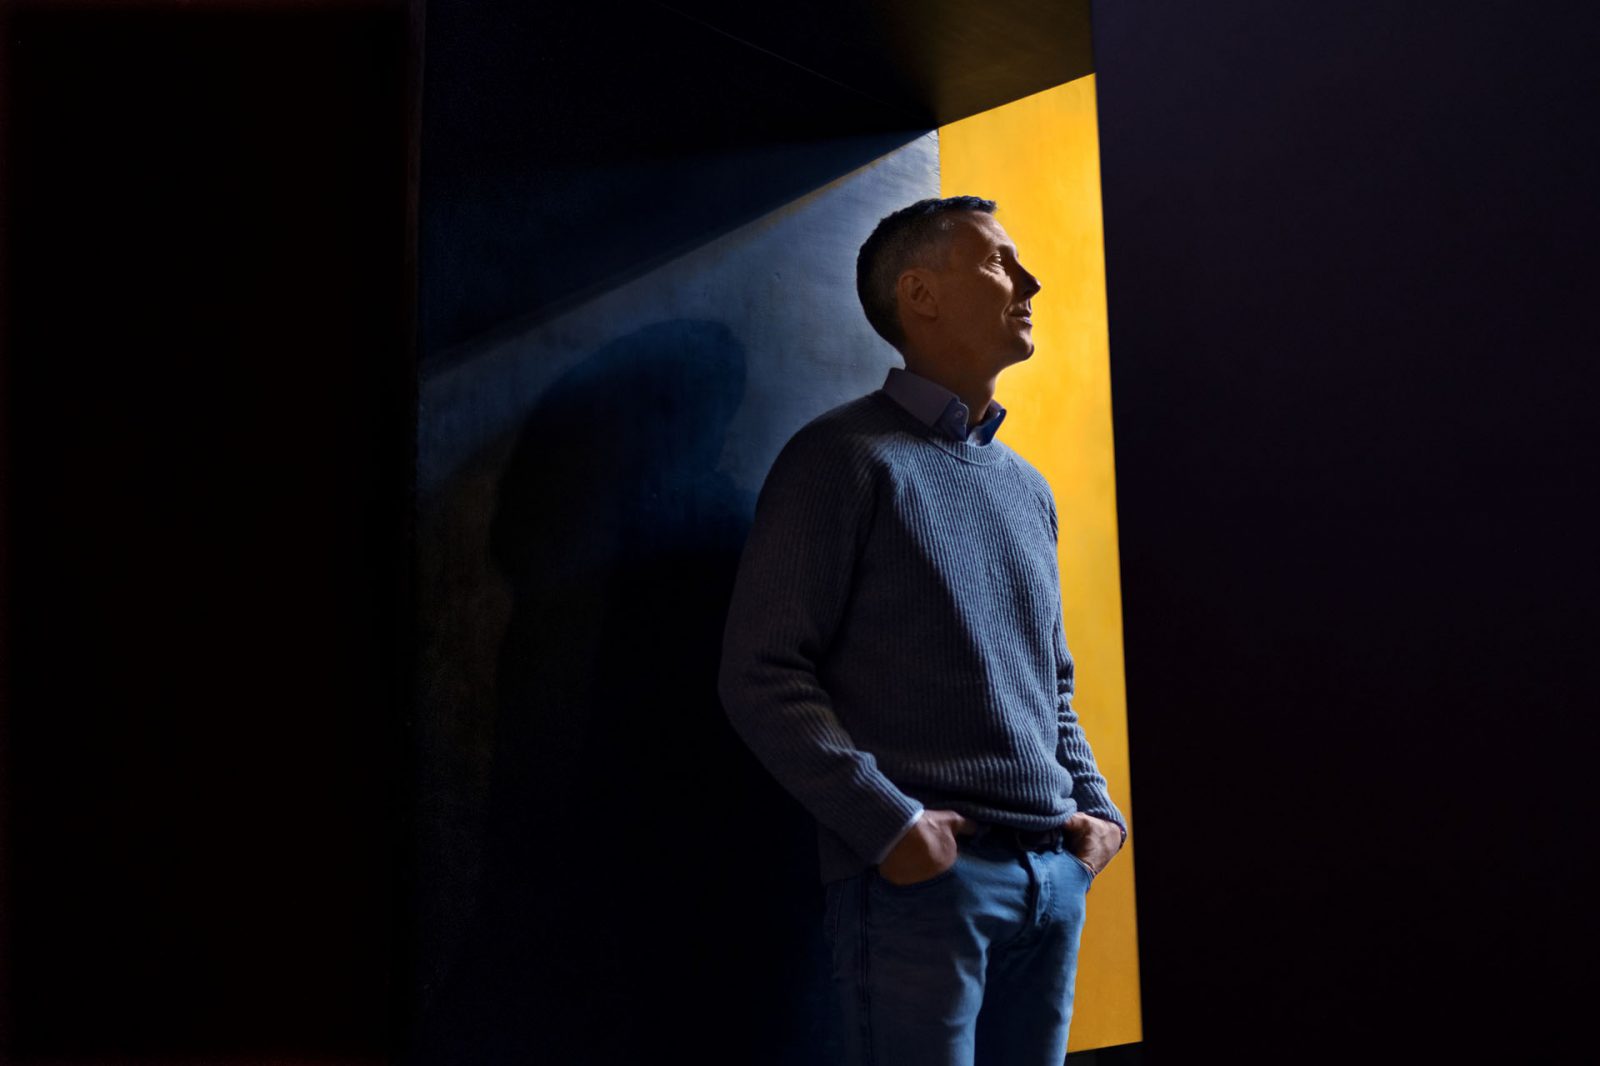 Nick Hækkerup portræt til Euroman
Photographer: Jasper Carlberg